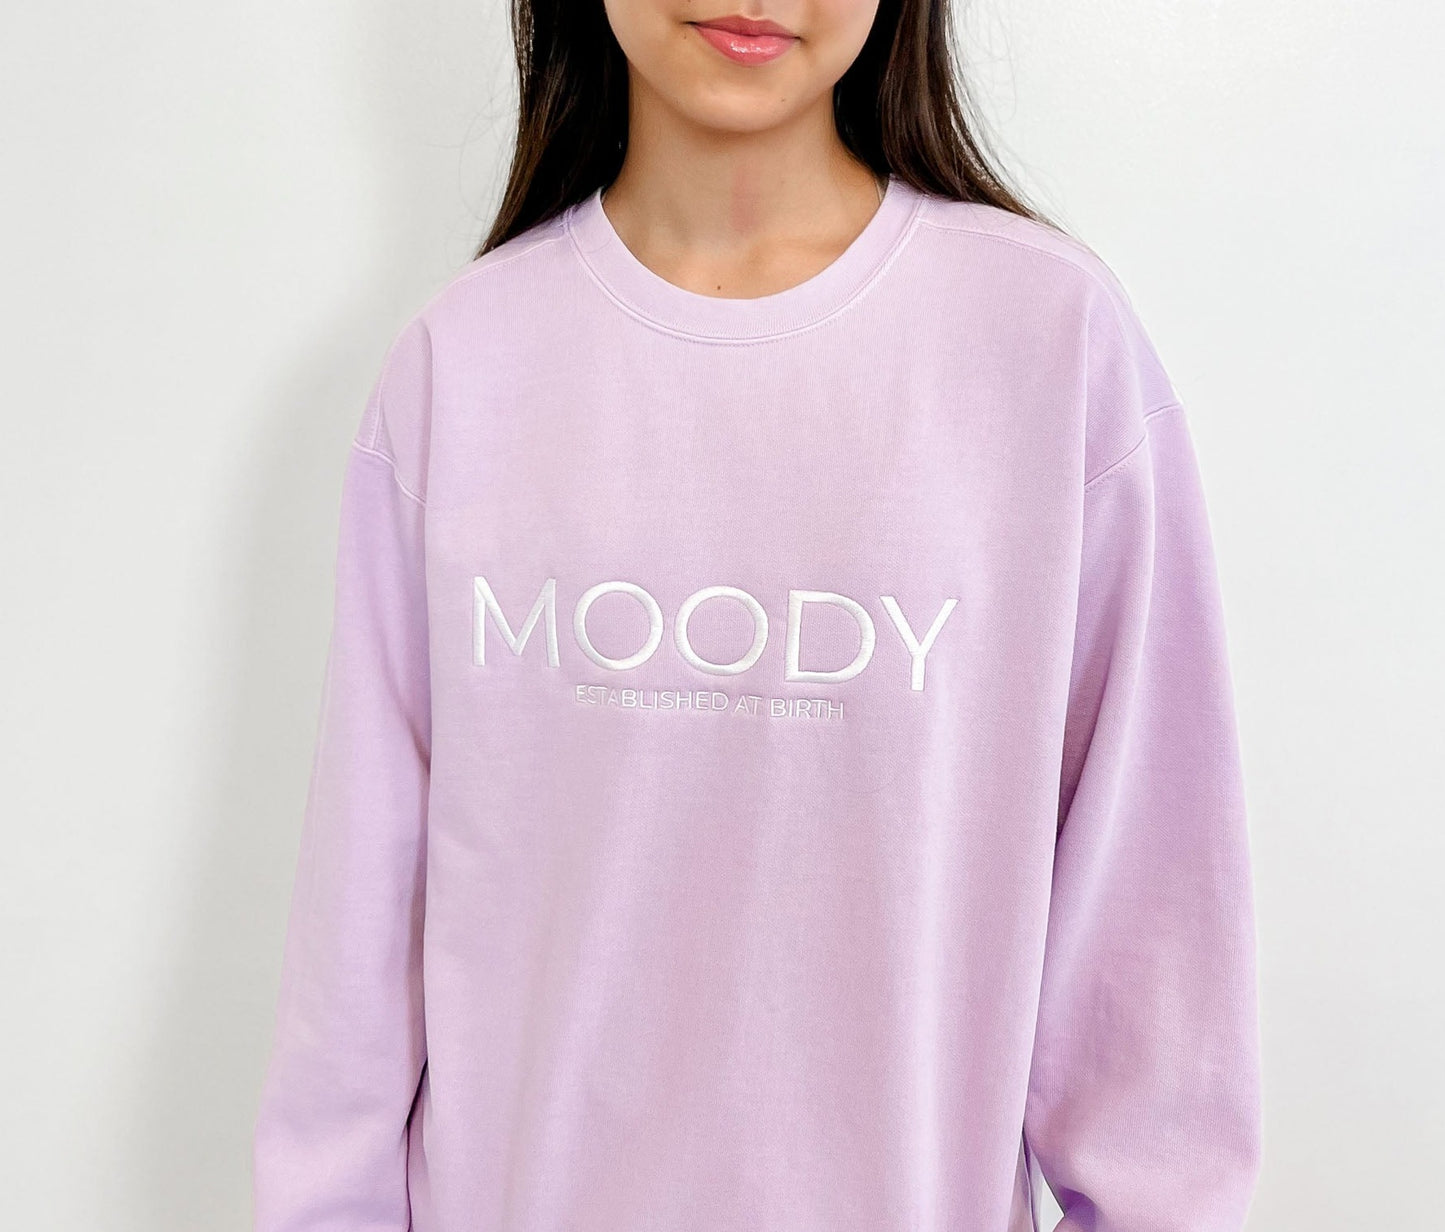 Moody Classic Fit Crewneck Sweatshirt